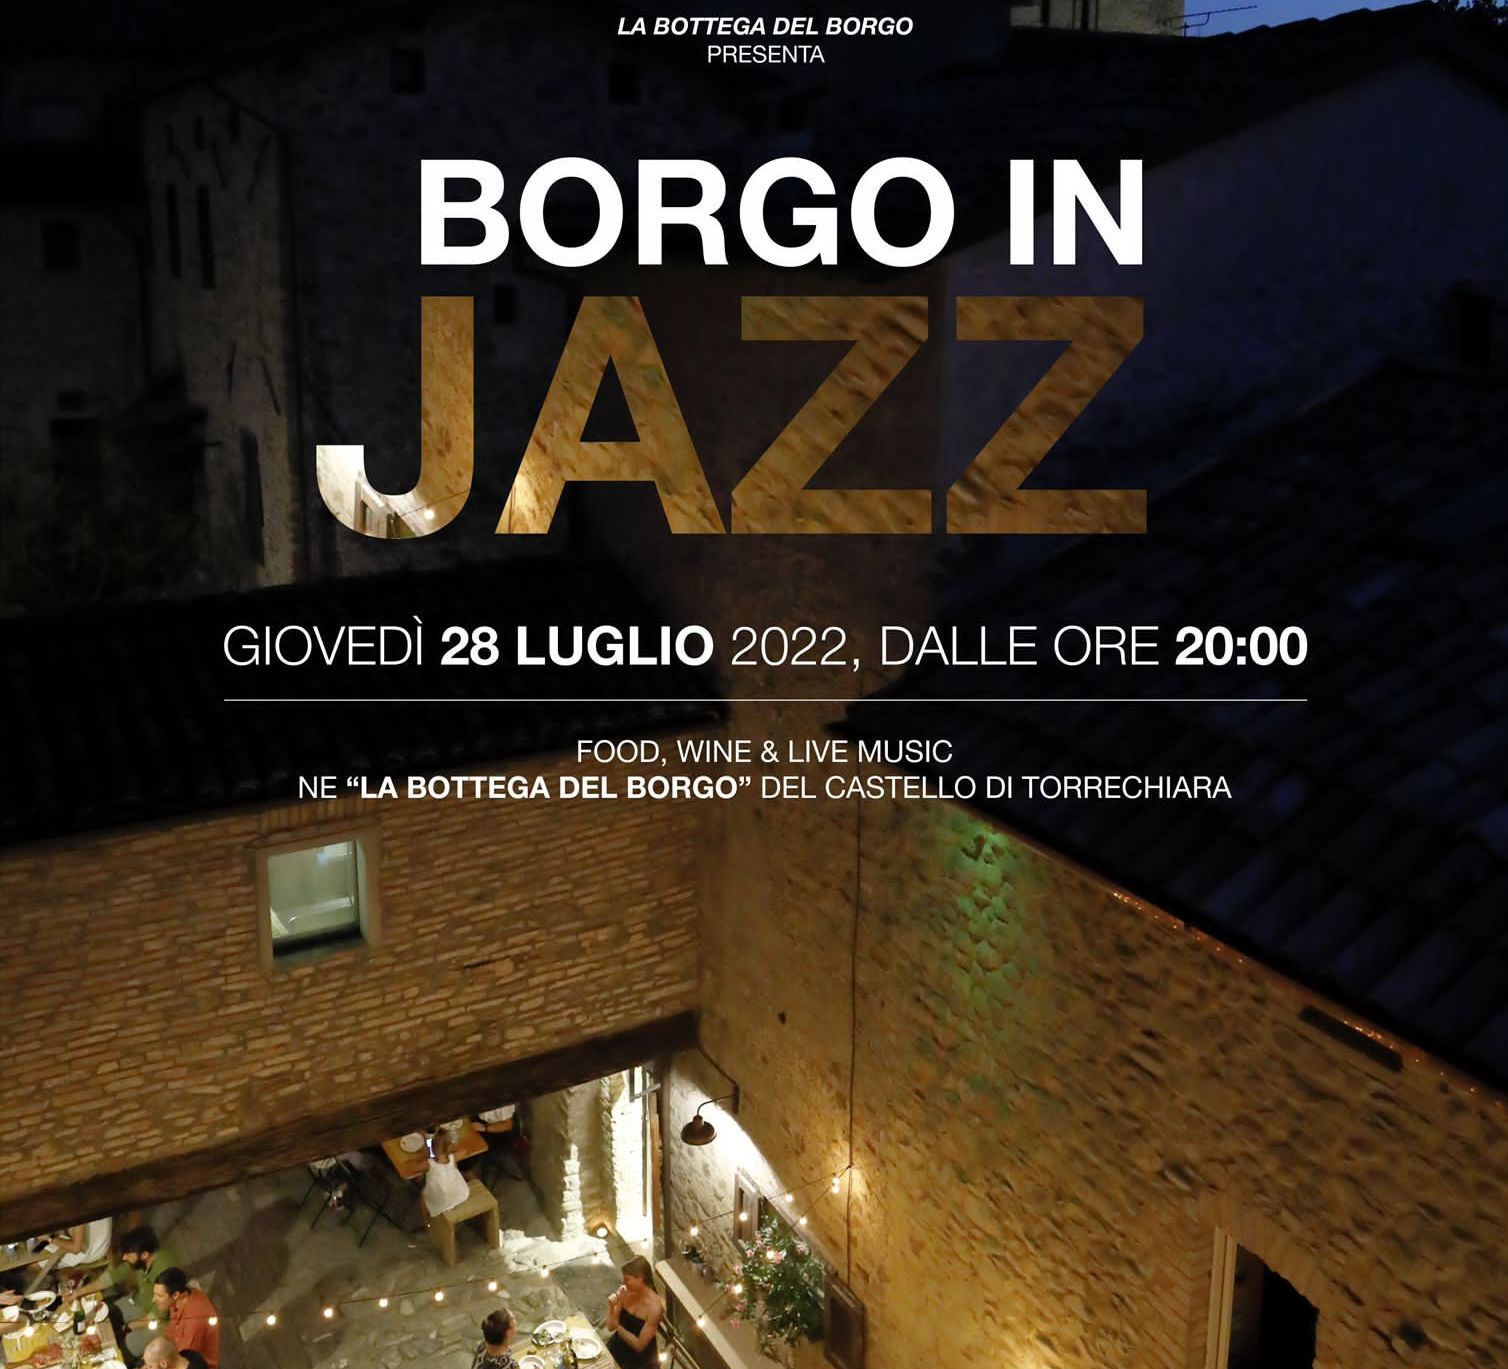 Borgo in Jazz – Giovedì 28 Luglio dalle 20:00